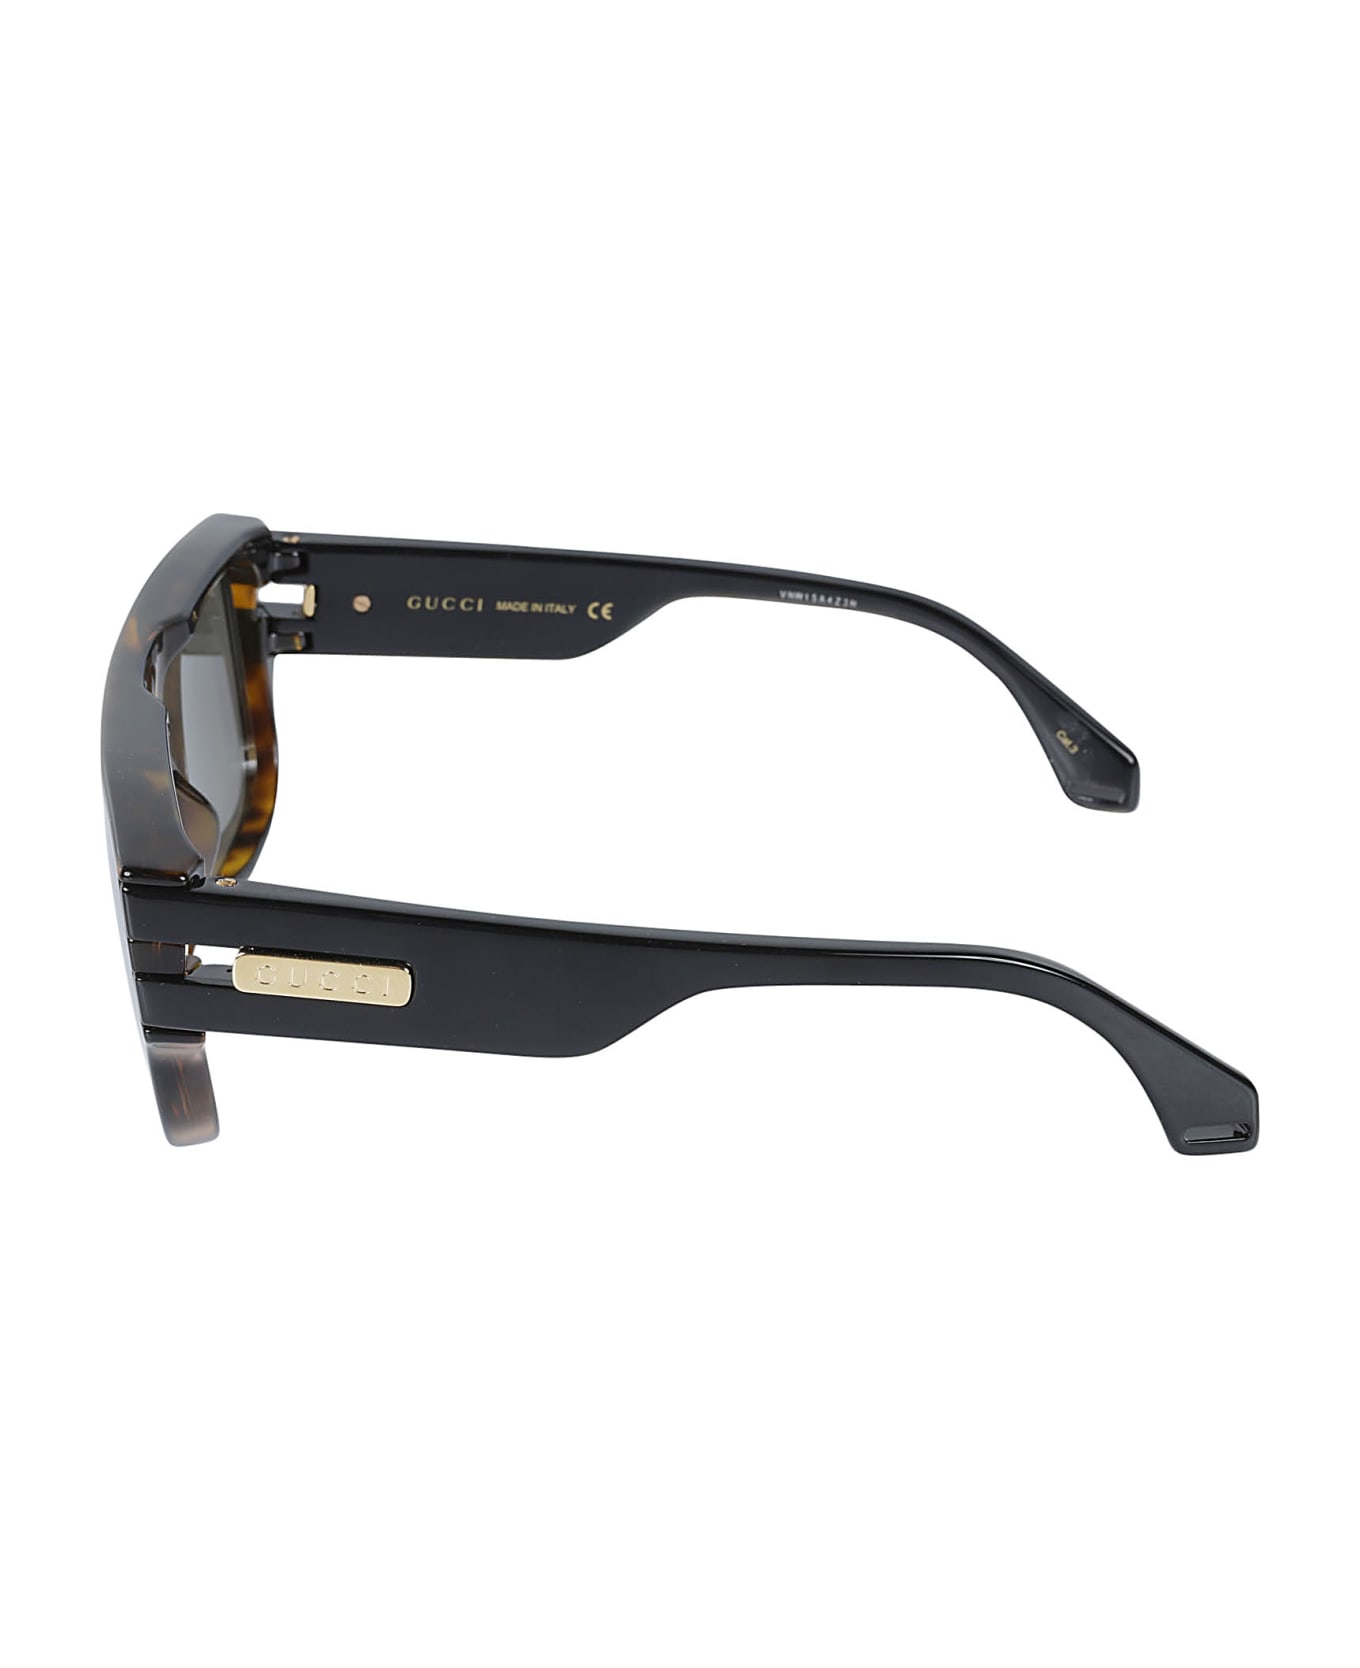 Gucci Eyewear Rectangle Retro Sunglasses - 004 havana black silver サングラス